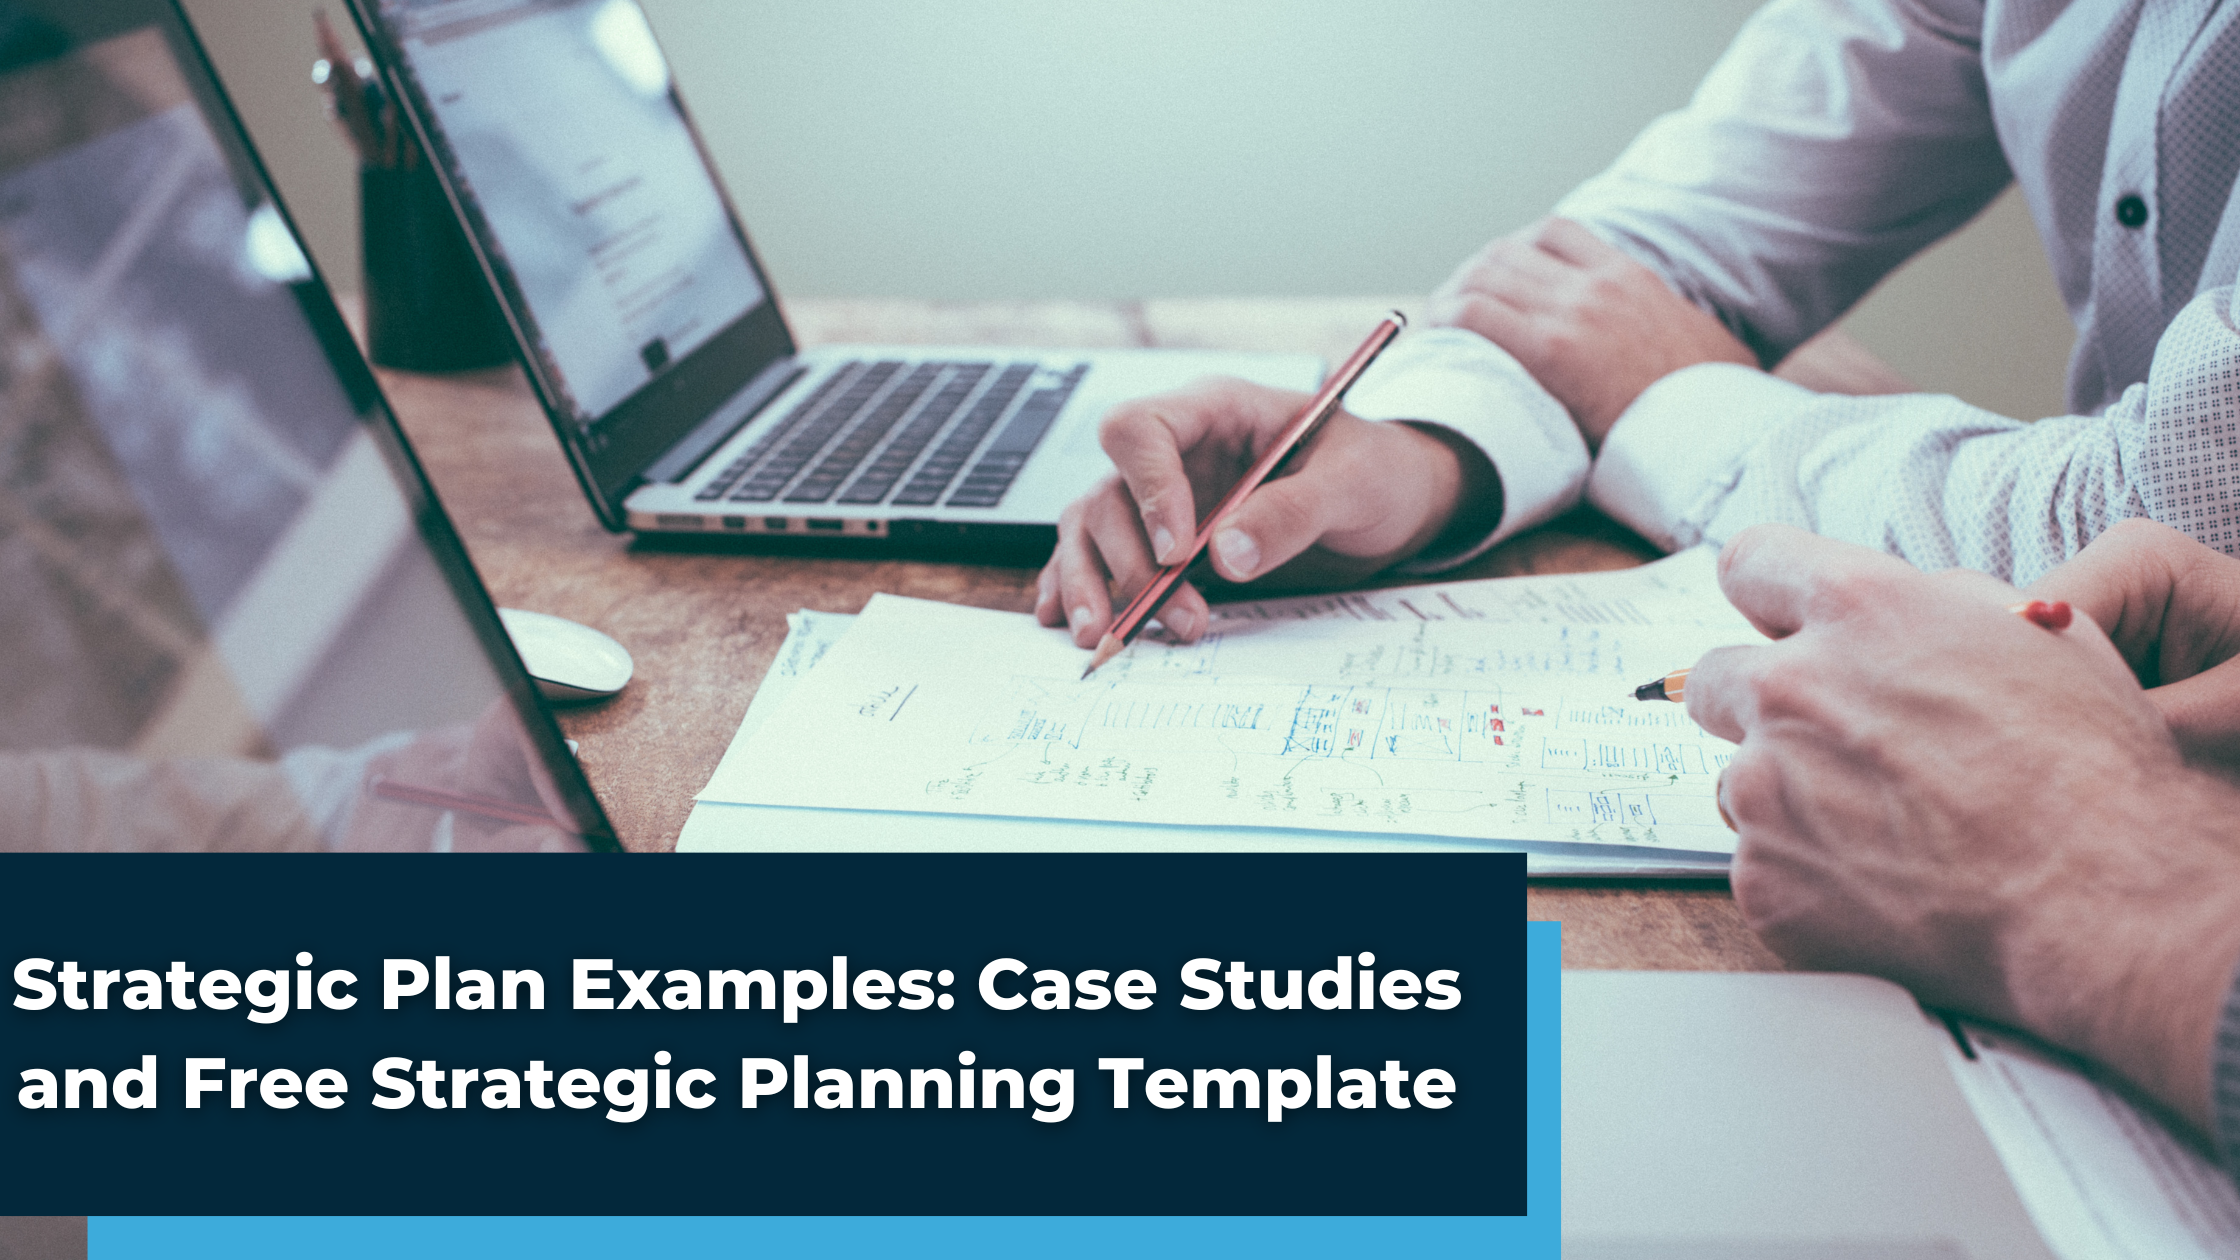 dynamic strategic planning case study